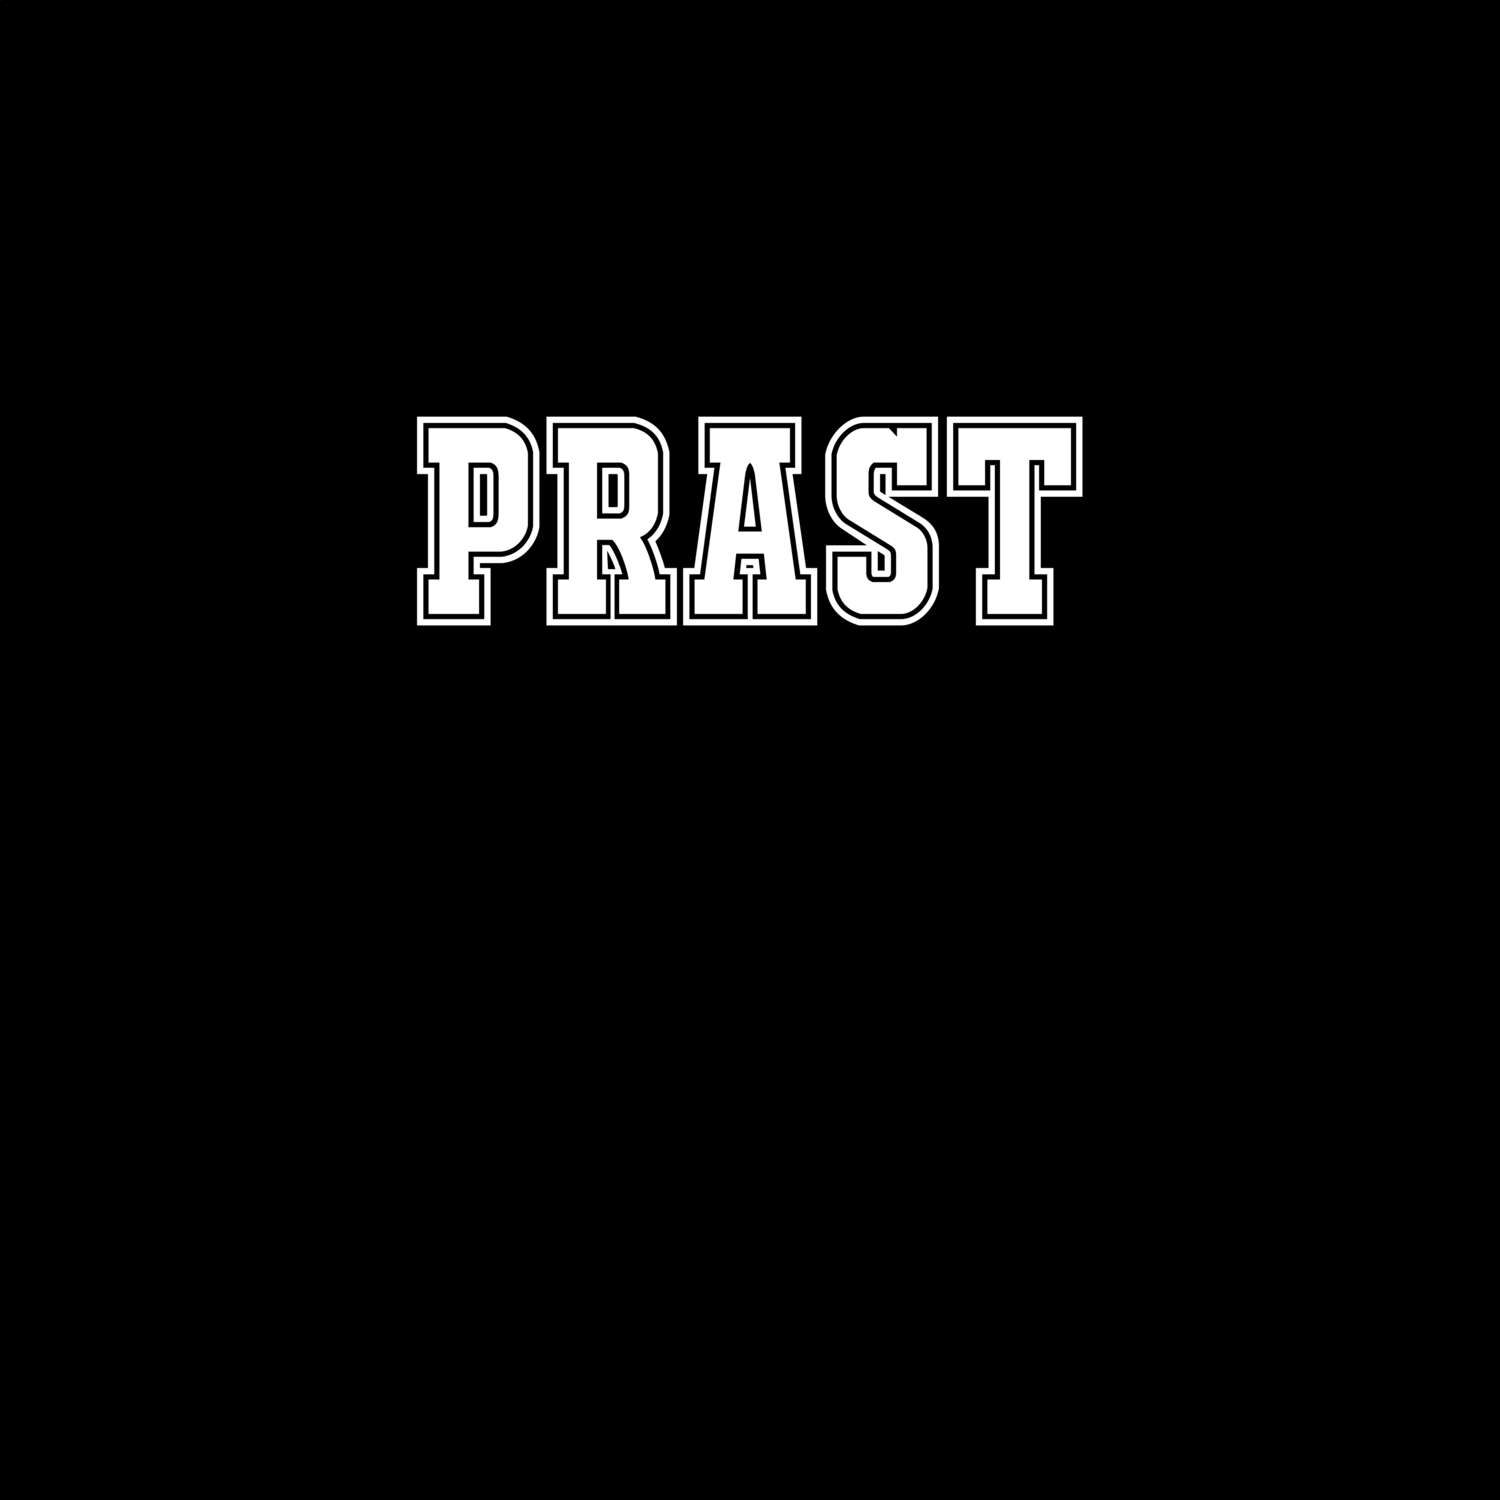 Prast T-Shirt »Classic«